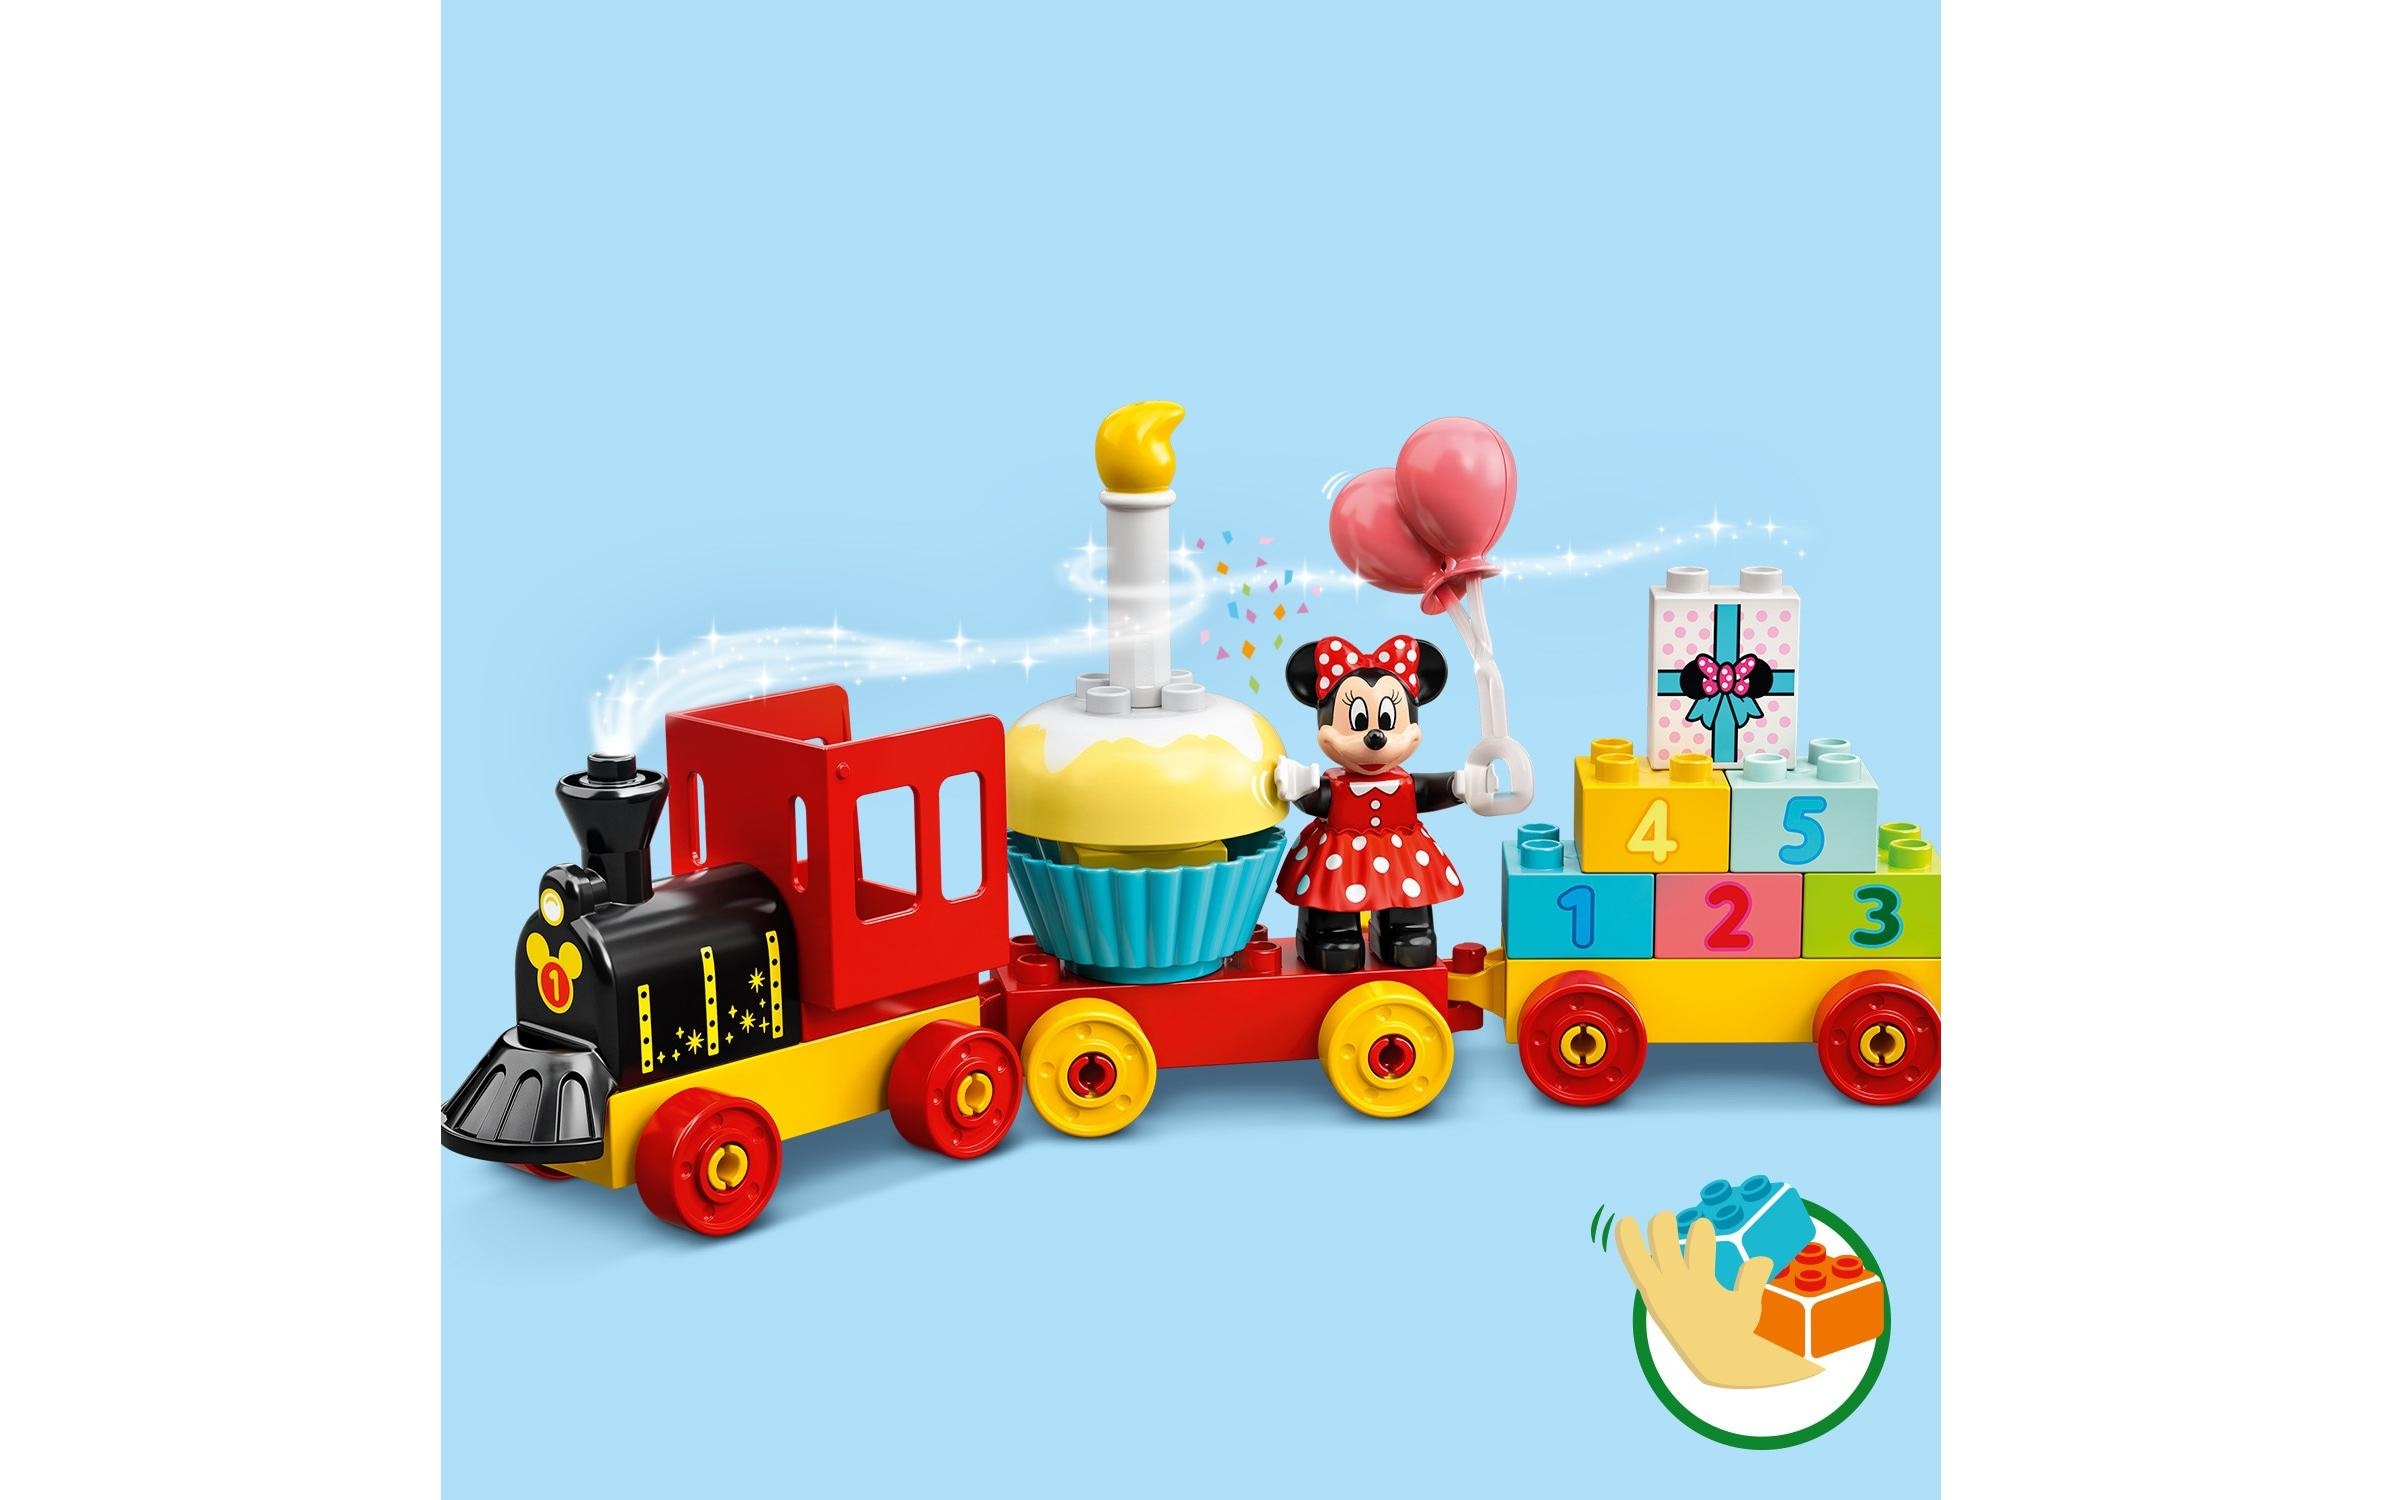 LEGO® Konstruktionsspielsteine »Mickys & Minnies«